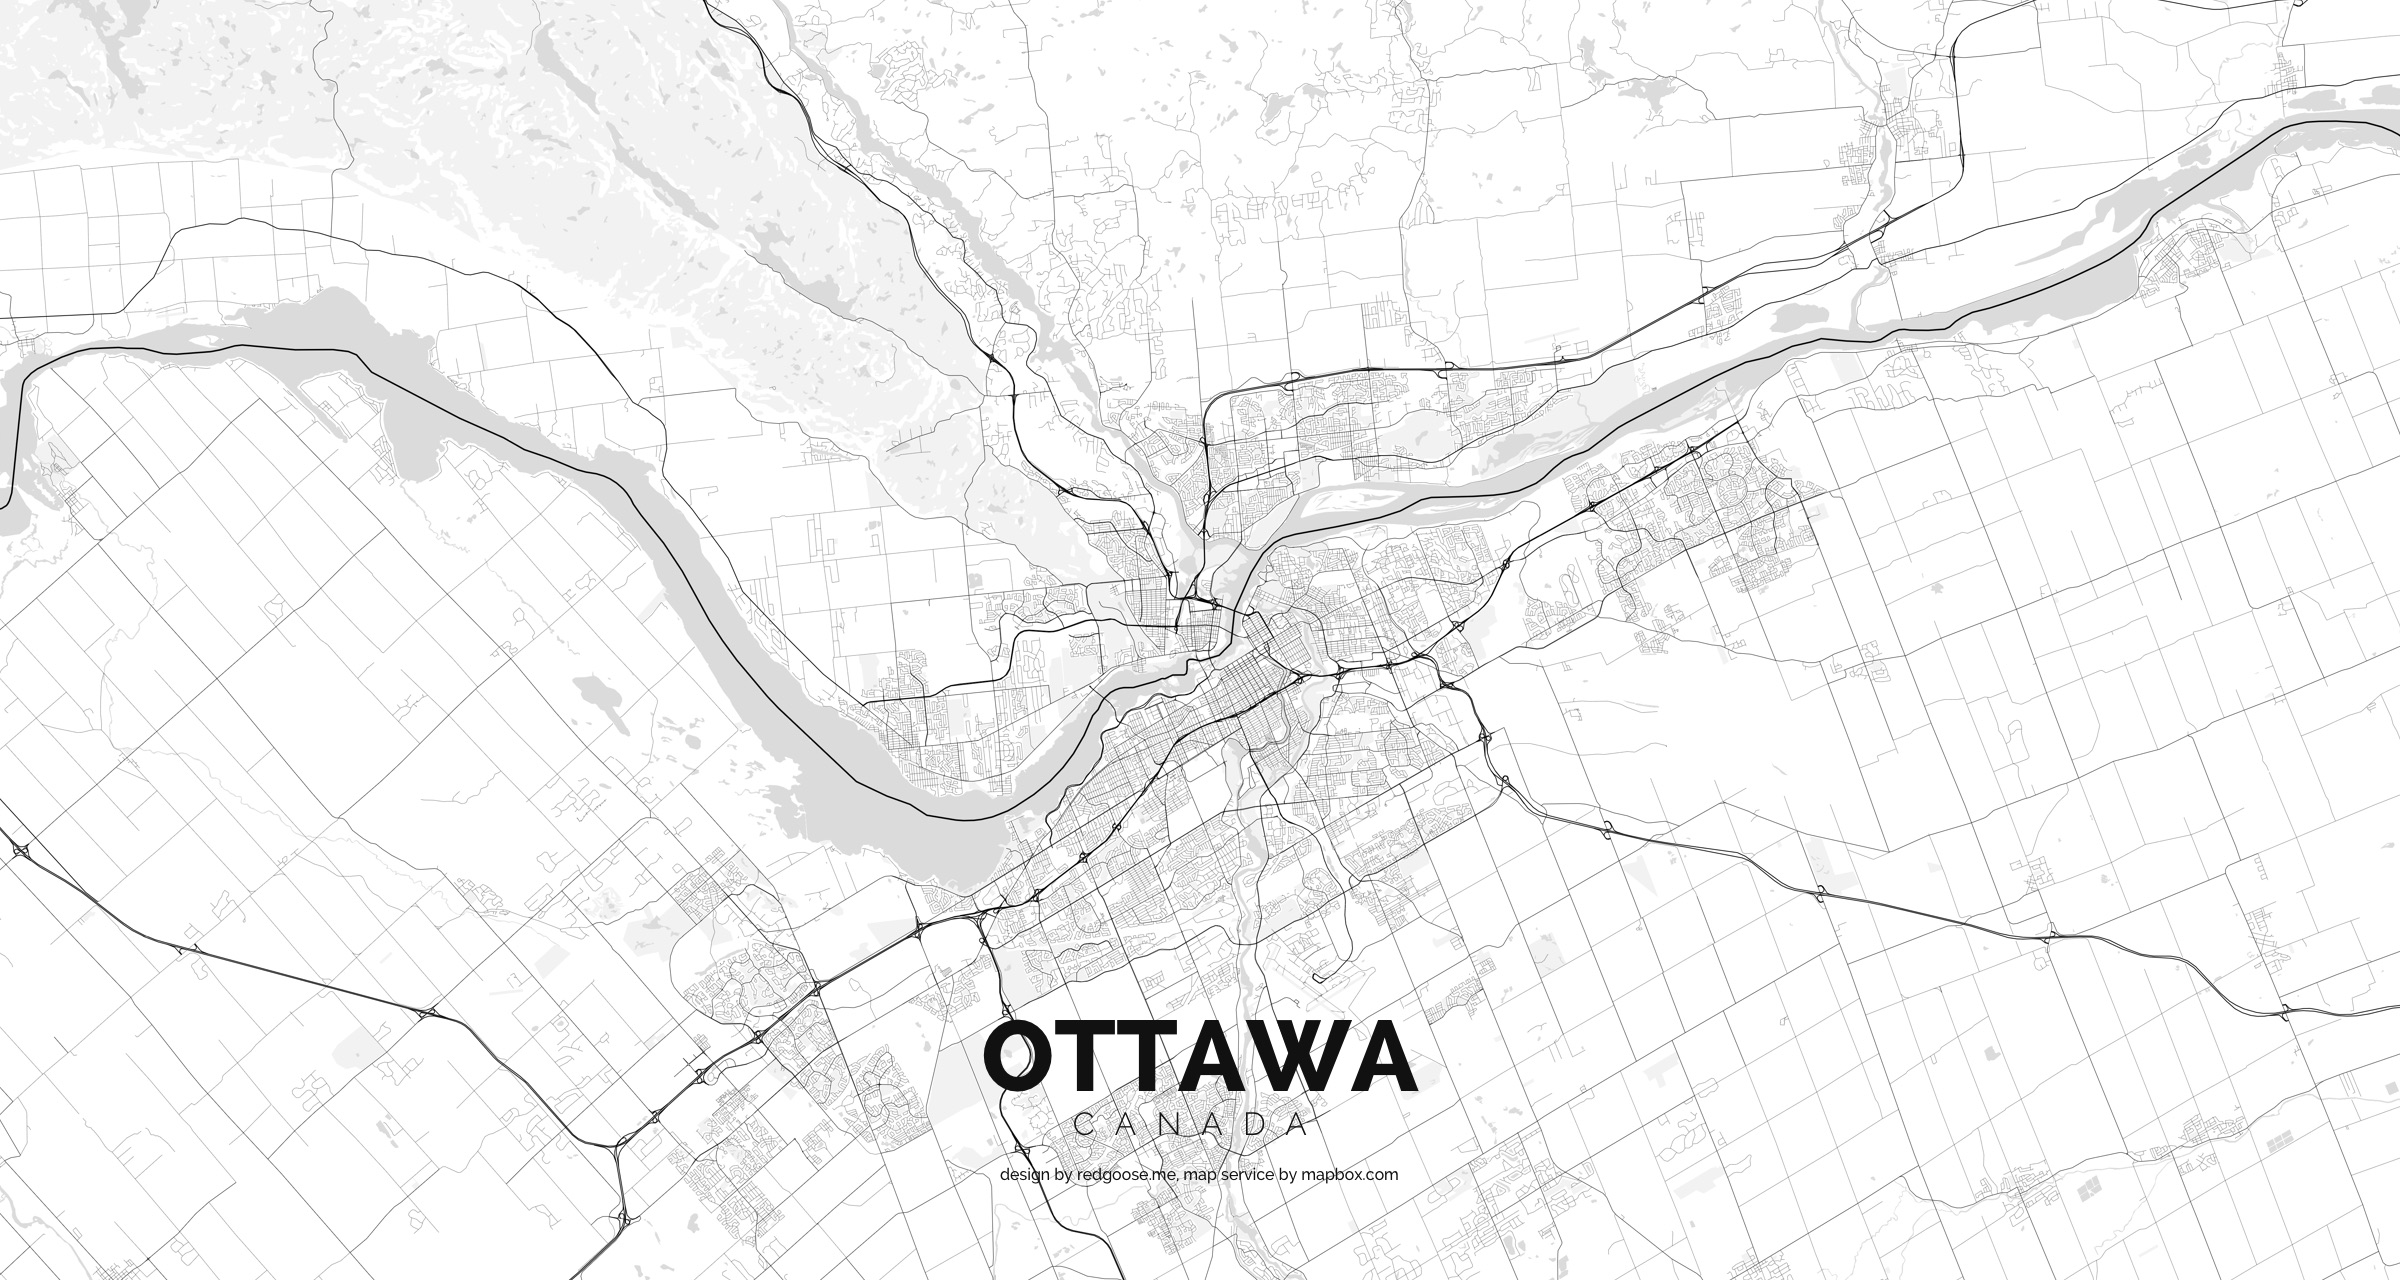 Canada_-_Ottawa.jpg